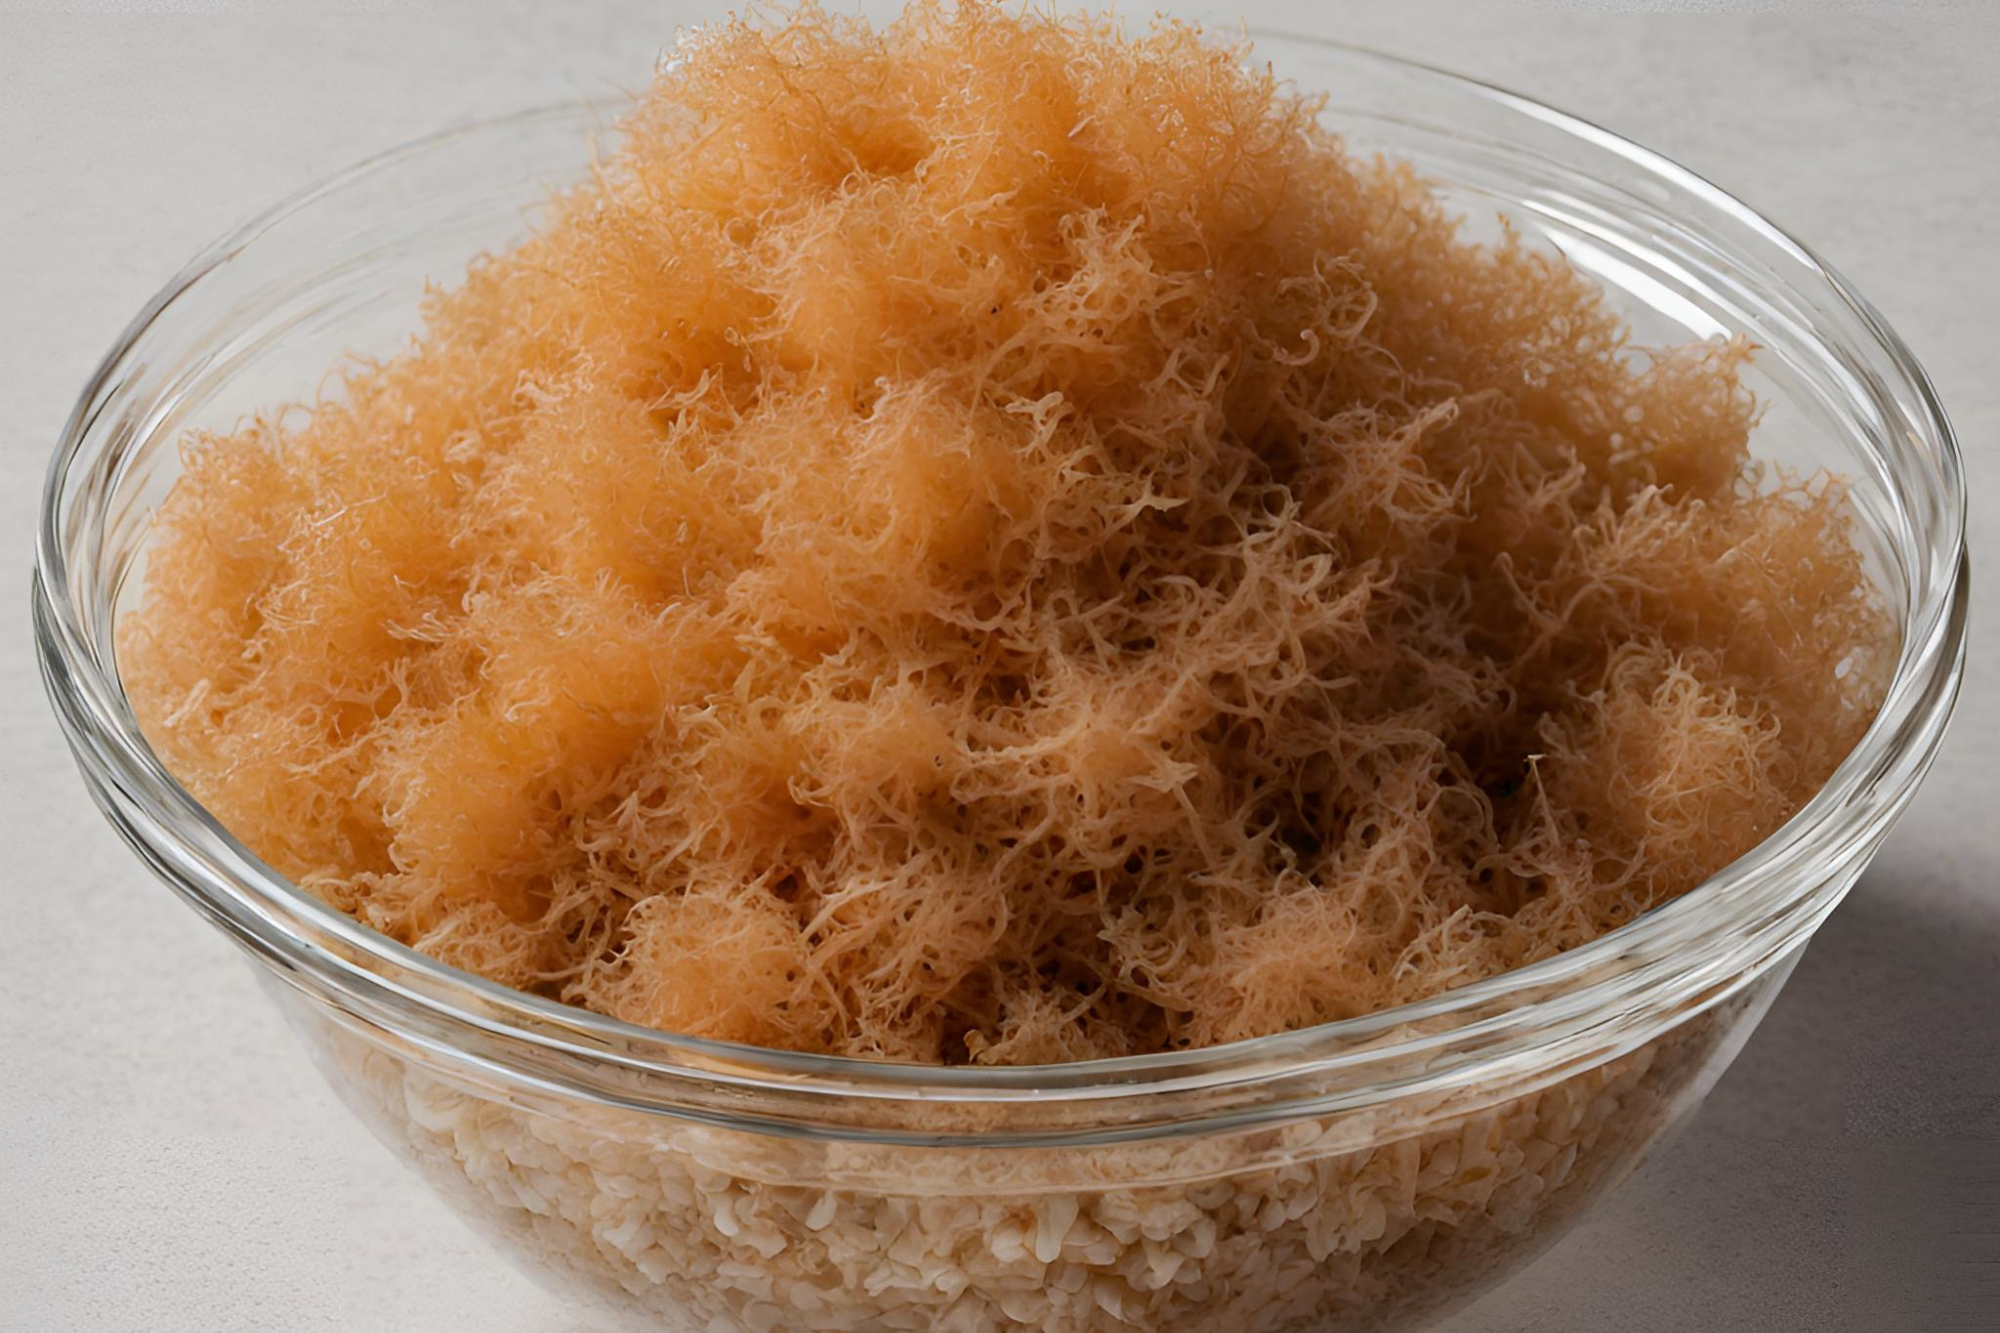 A bowl of dried sea moss